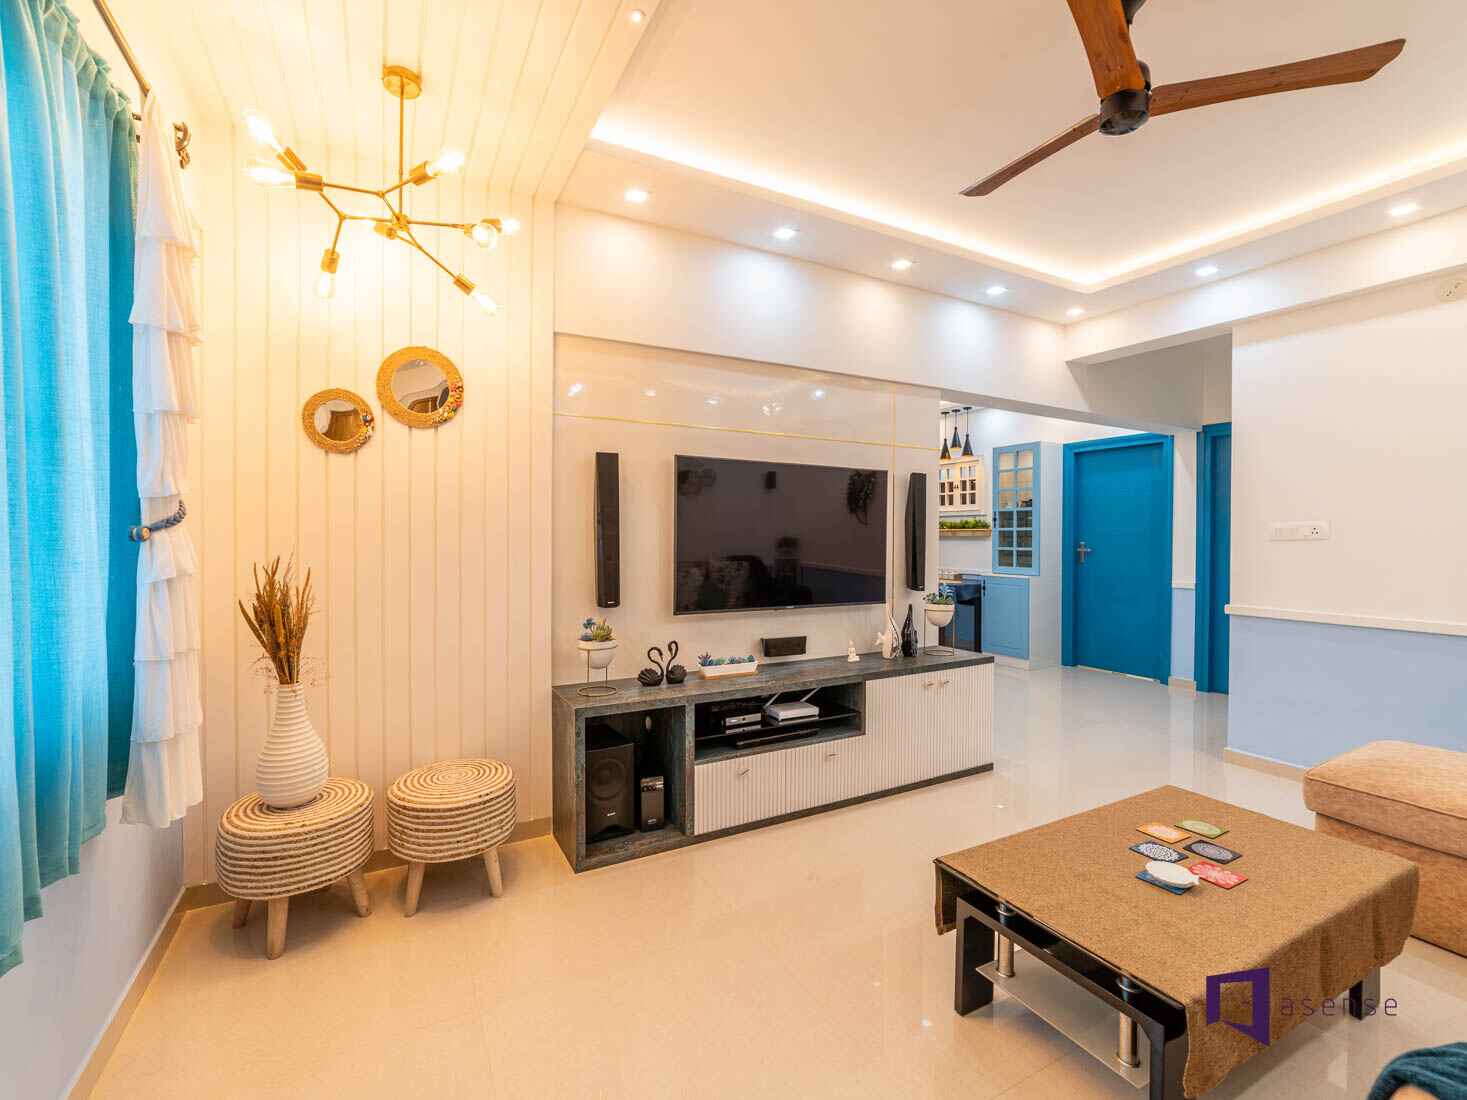 Asense Interior Design – Elegant and Modern Living Space